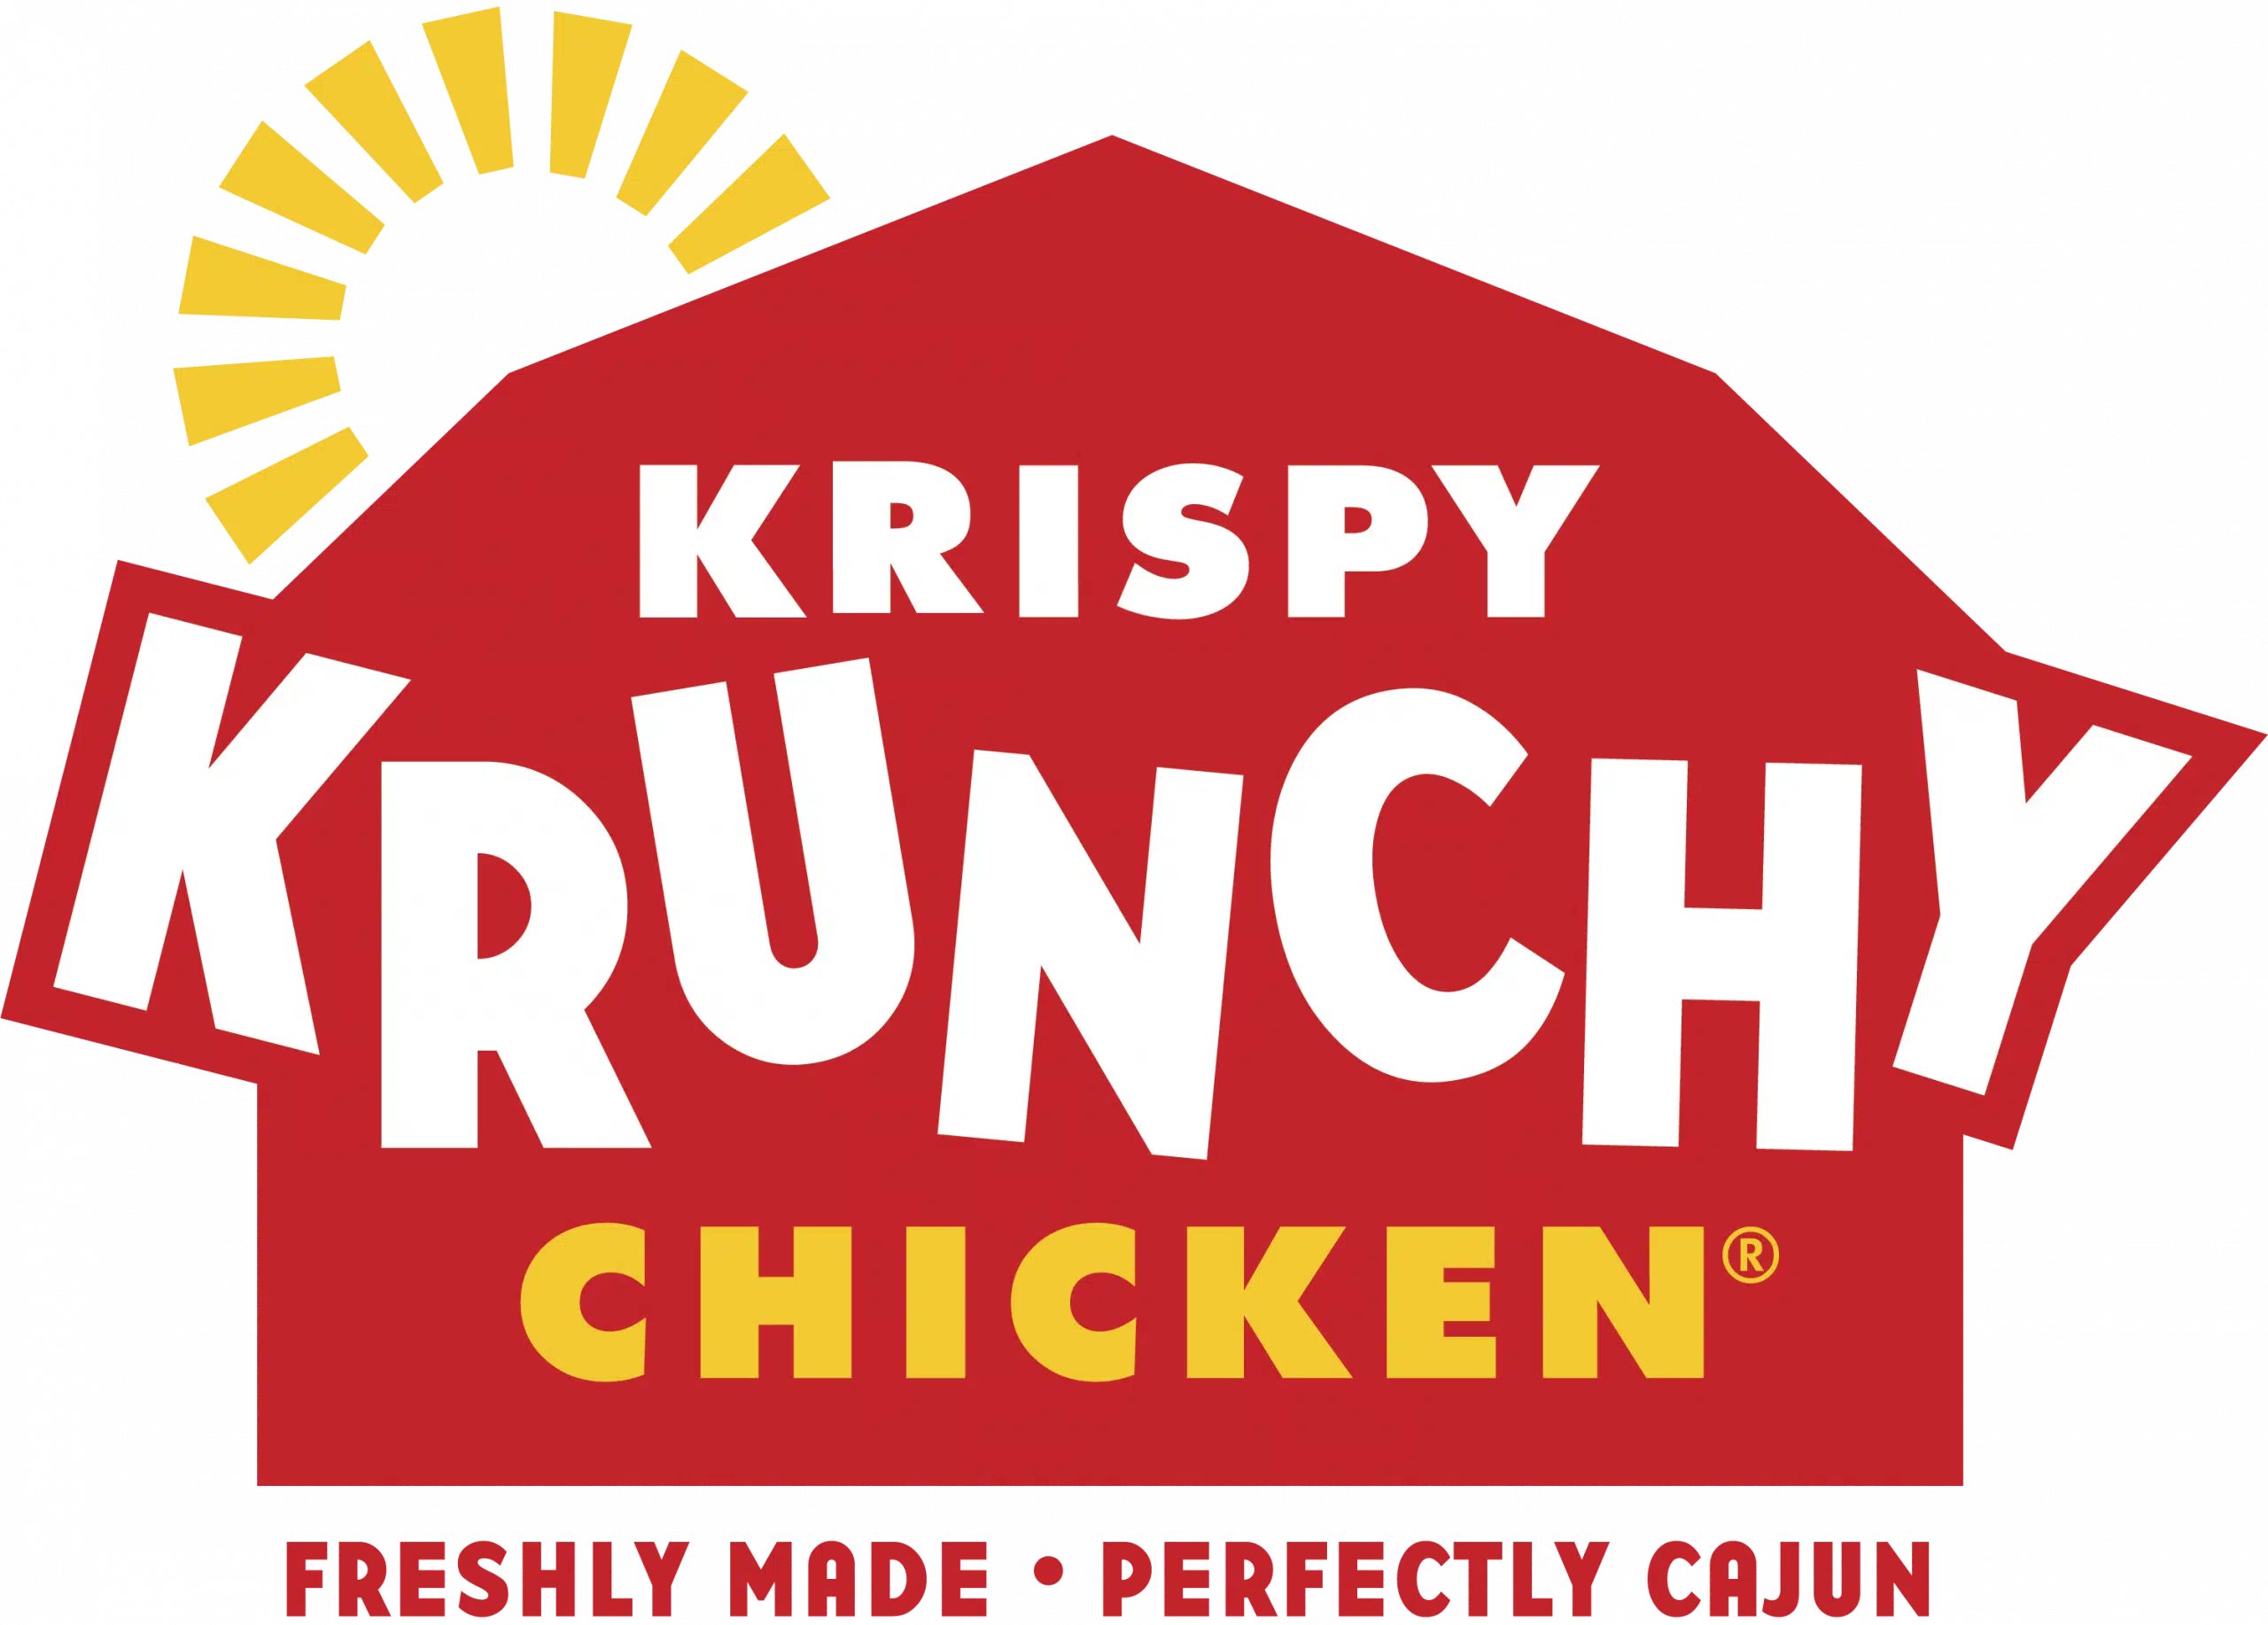 Louisiana based Krispy Krunchy Chicken on the verge of major growth